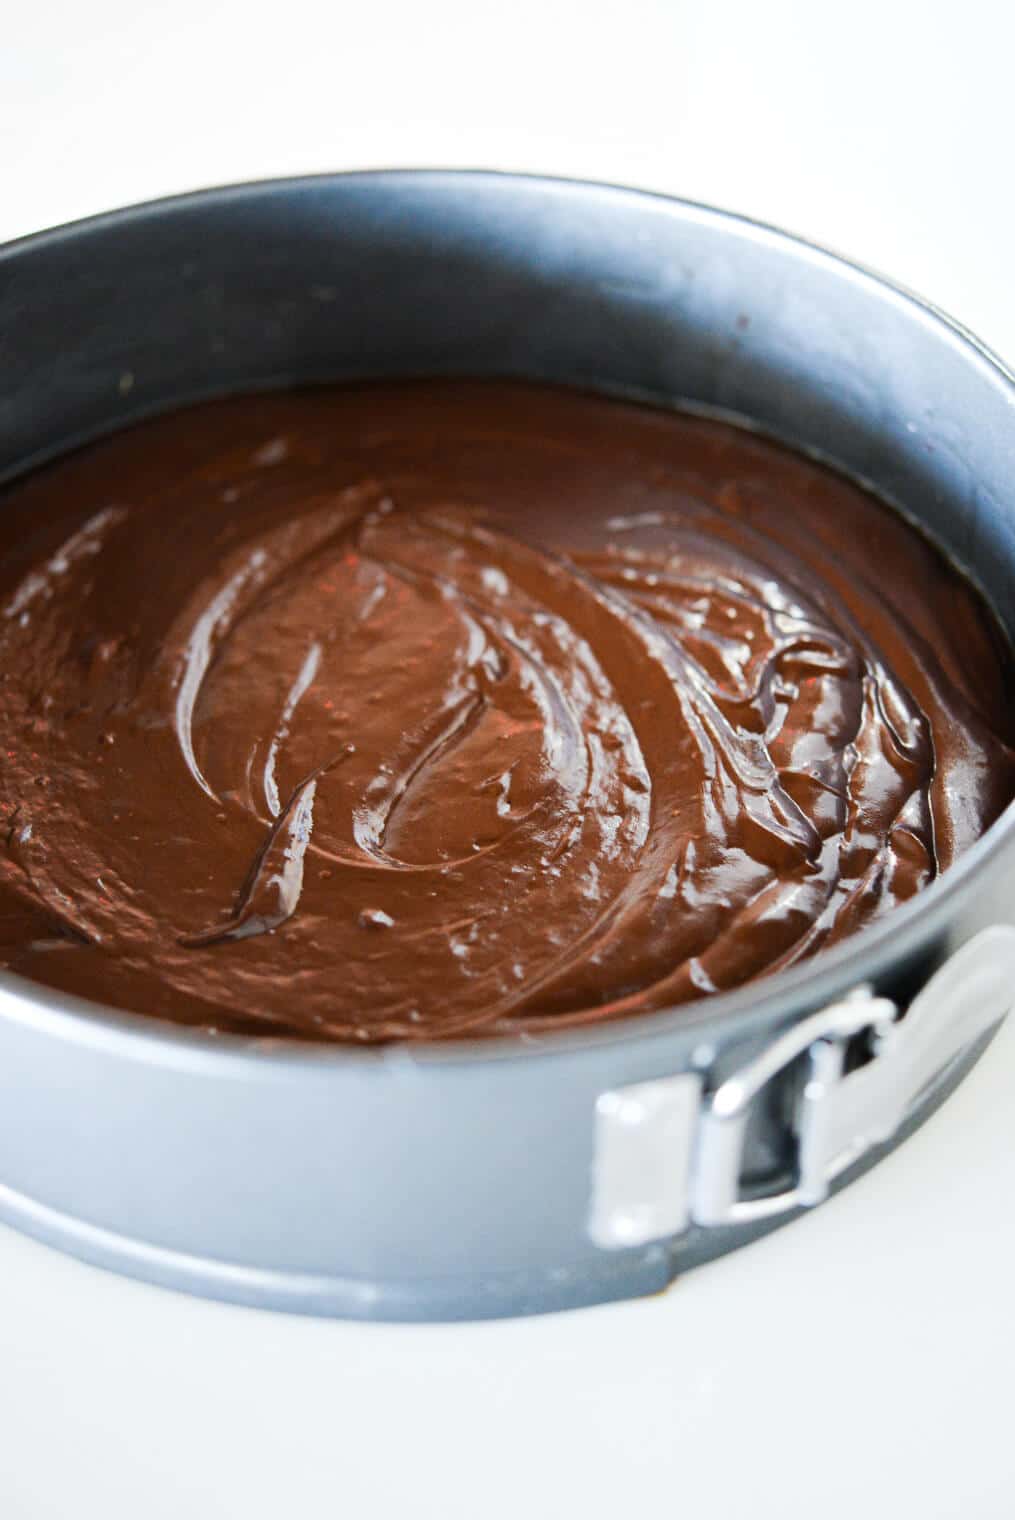 flourless dark chocolate cake batter in a springform baking pan